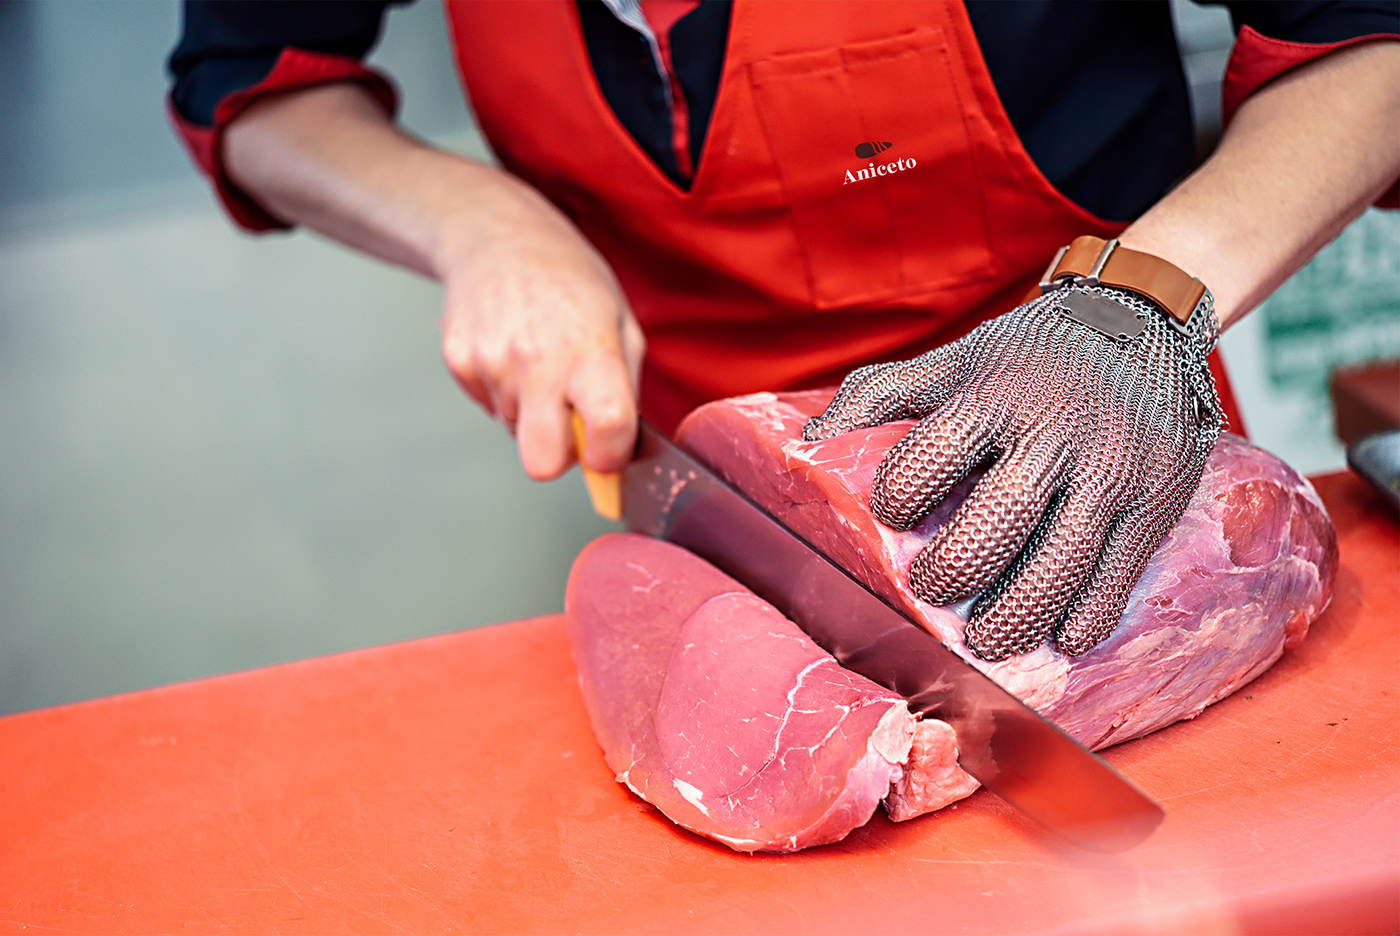 brand brand identity Brazil butcher butchery carniceria Food  Identity Design meat visual identity